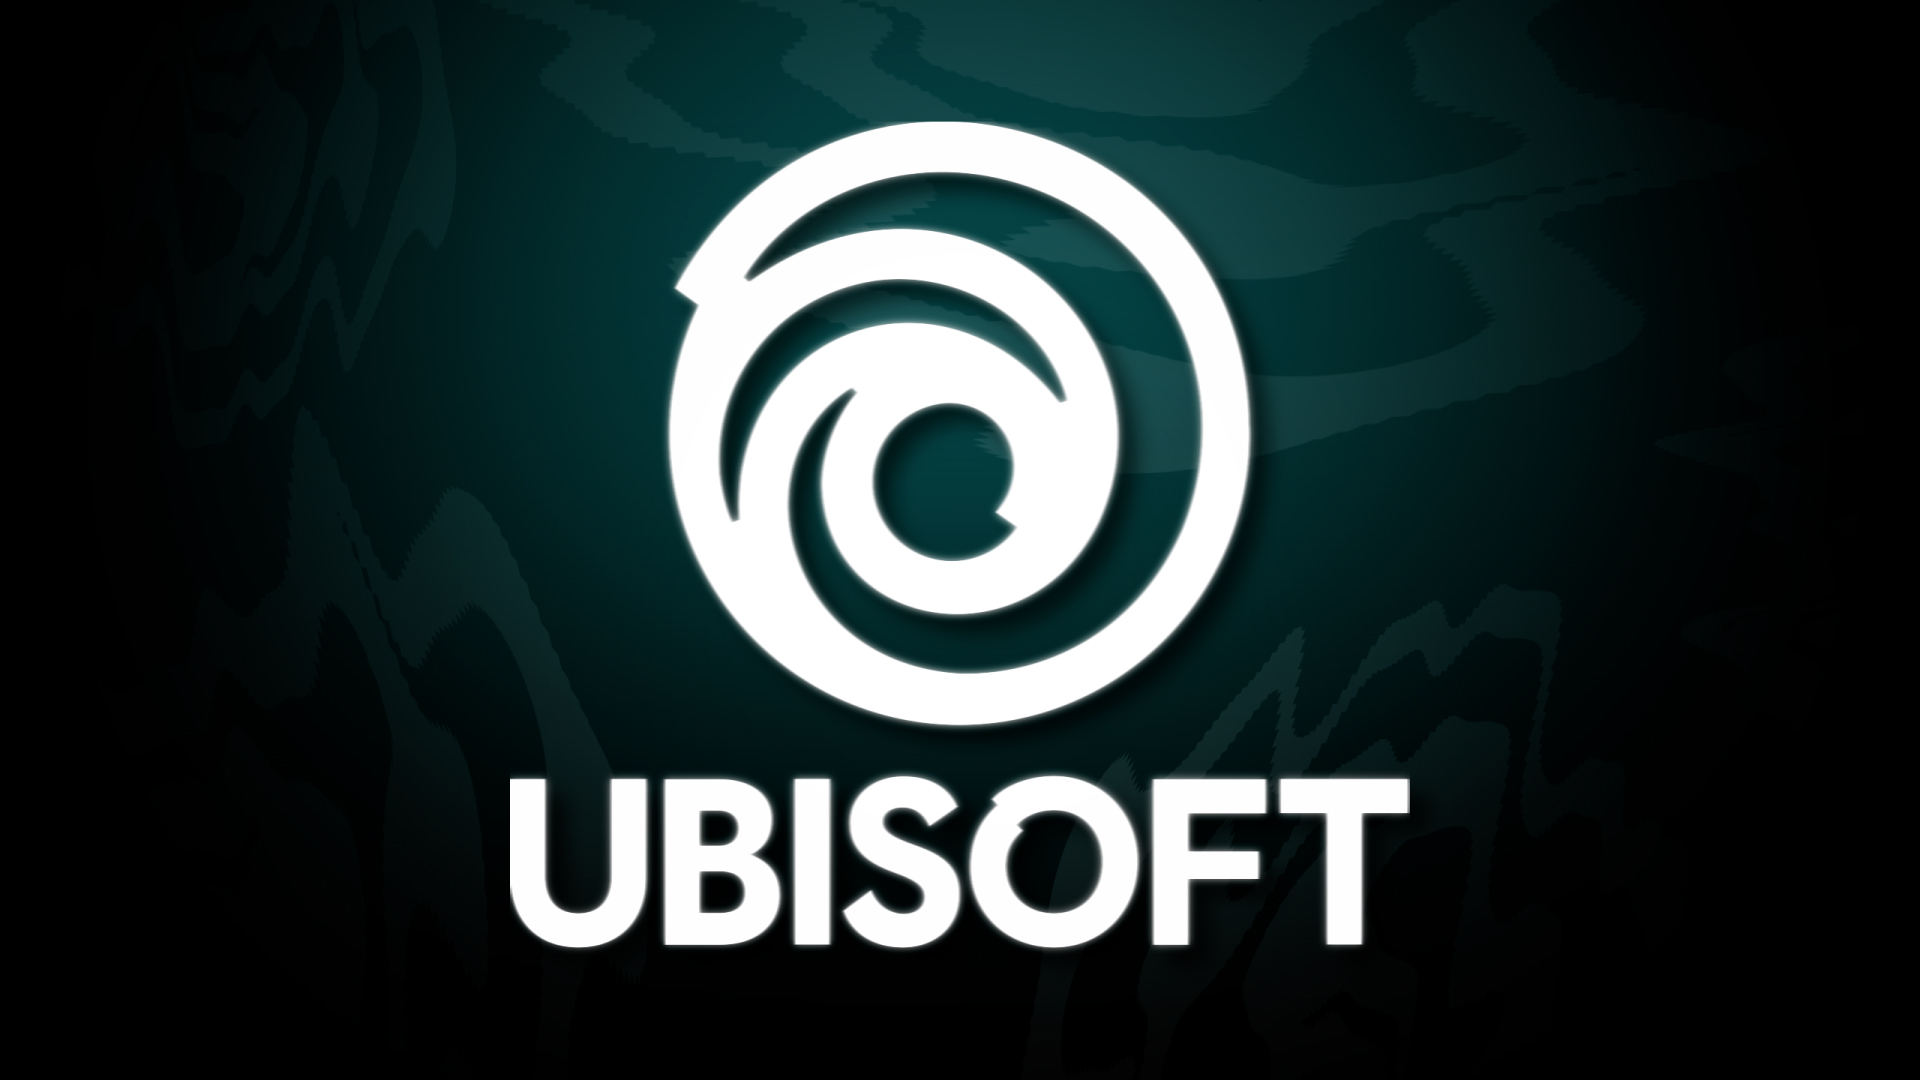 Ubisoft uplay. Юбисофт. Юбисофт игры. Логотип Ubisoft. Юбисофт сторе.